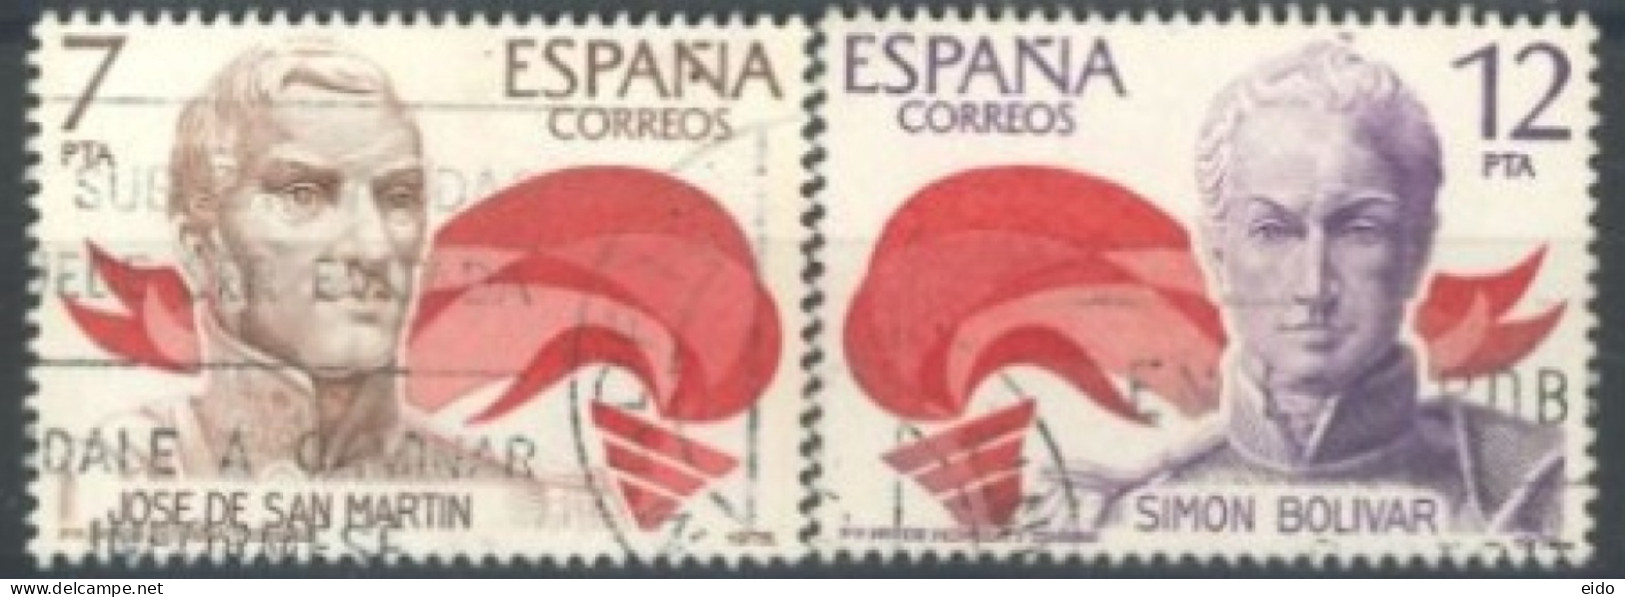 SPAIN, 1978, JOSE DE SAN MARTIN & SIMON BOLIVAR STAMPS COMPLETE SET OF 2, # 2116/17, USED. - Usati